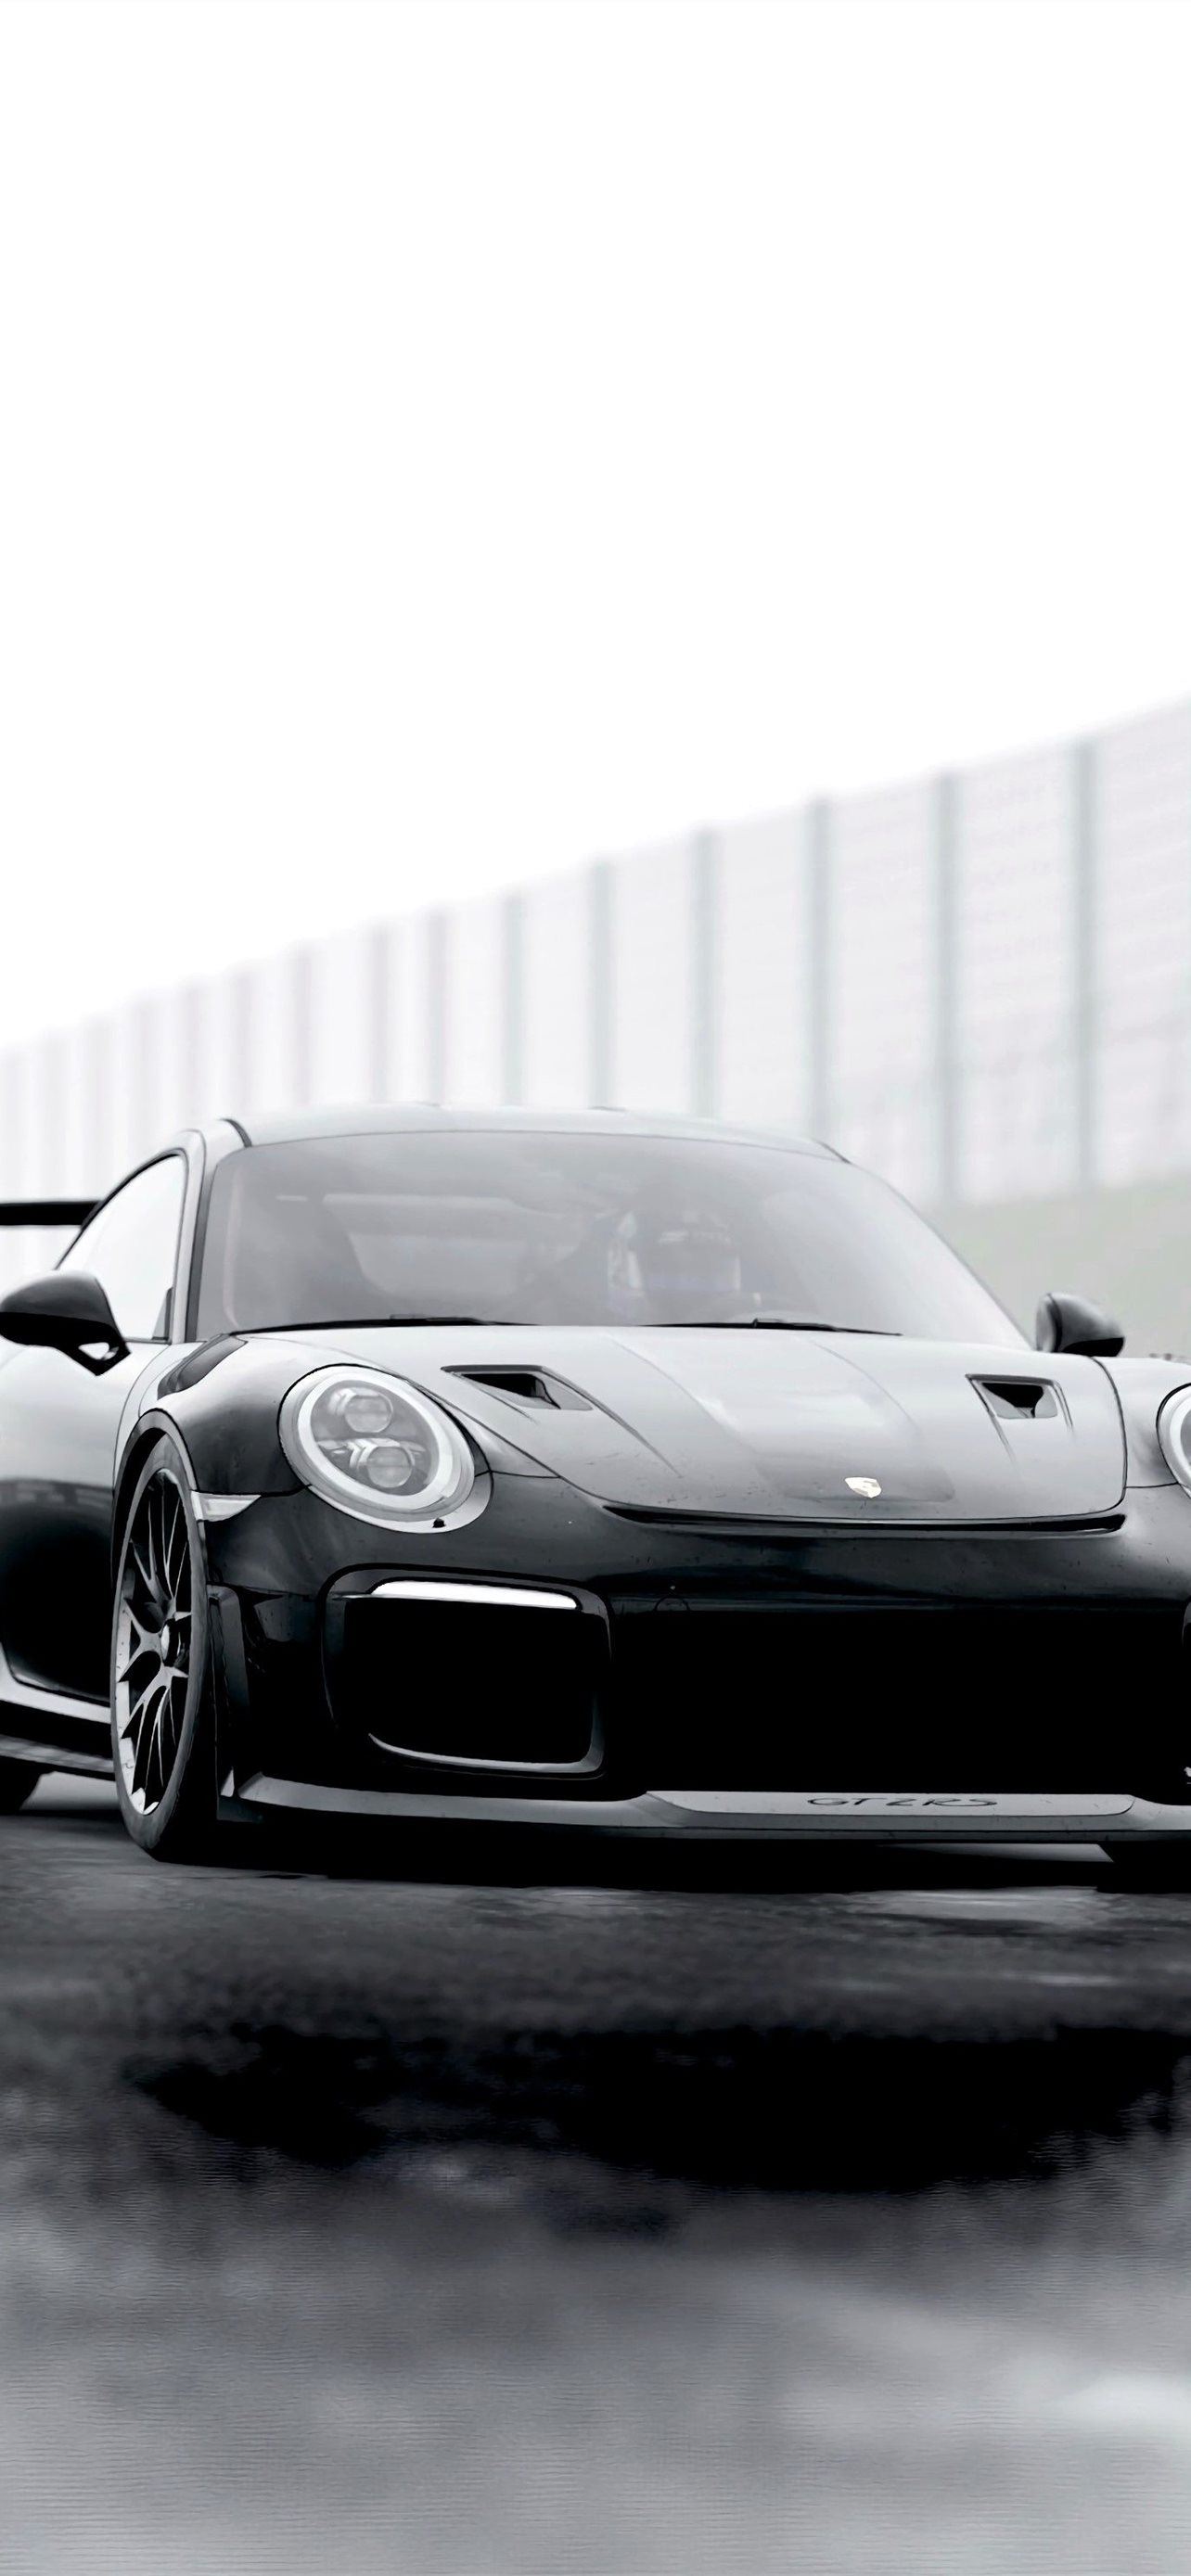 Porsche 911 Cabriolet Iphone Wallpapers Free Download